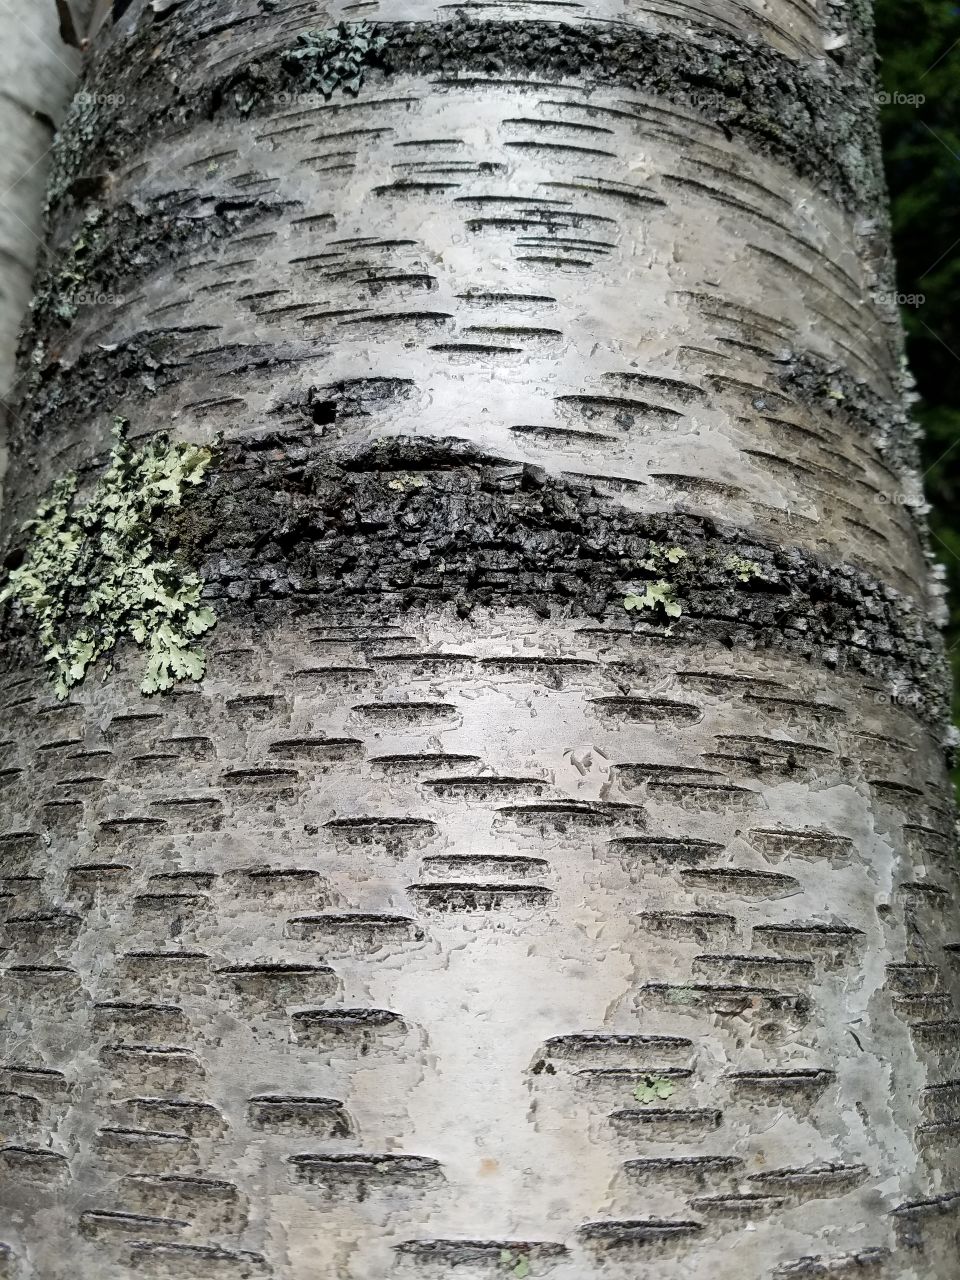 Birch tee bark